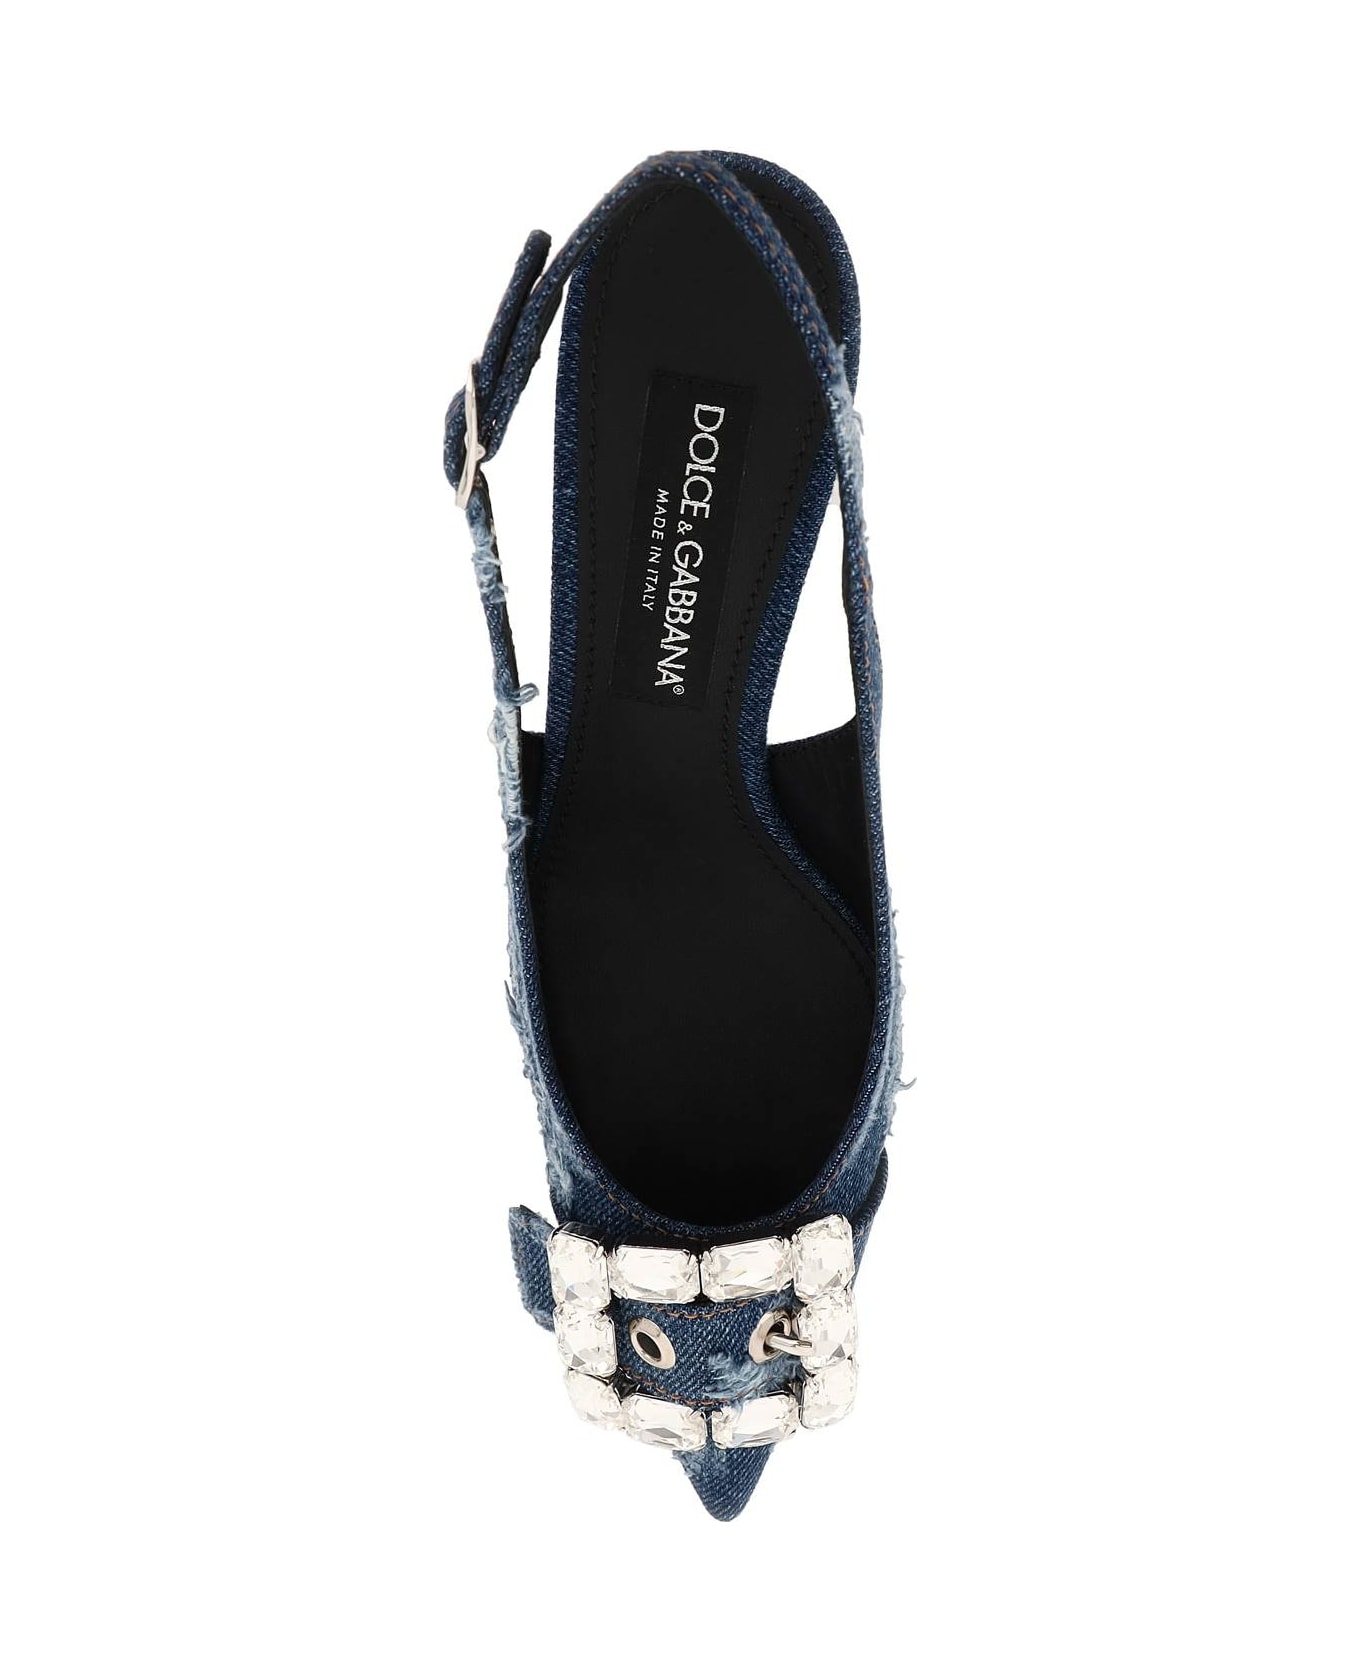 Dolce & Gabbana Slingback Pumps - Cobalto Scuro ハイヒール